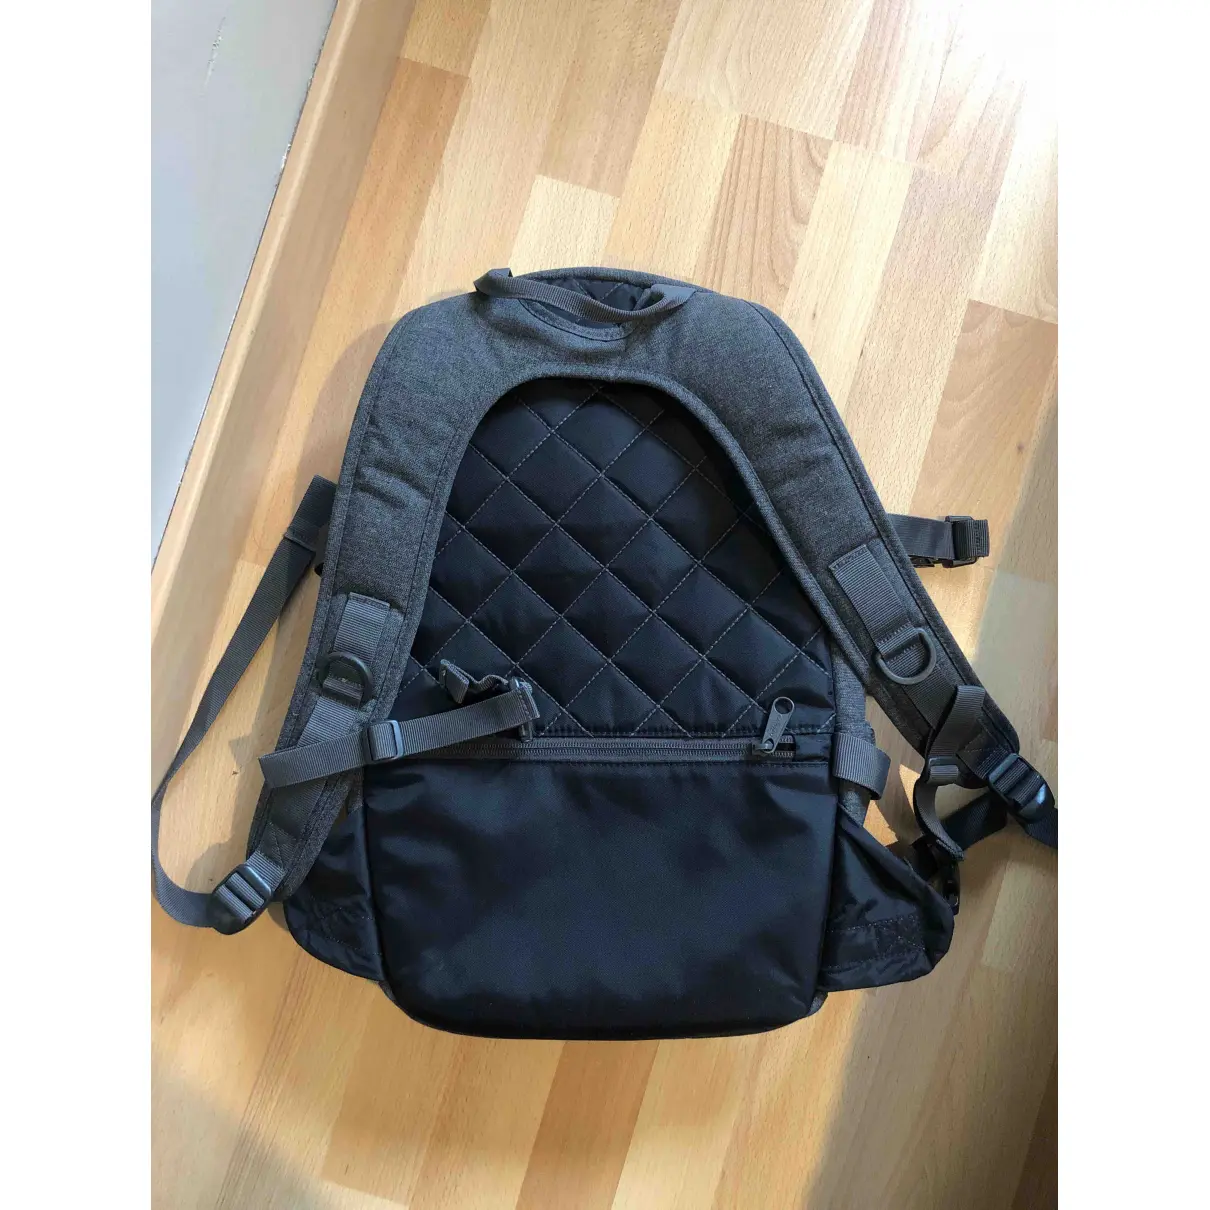 Buy Eastpak Backpack online